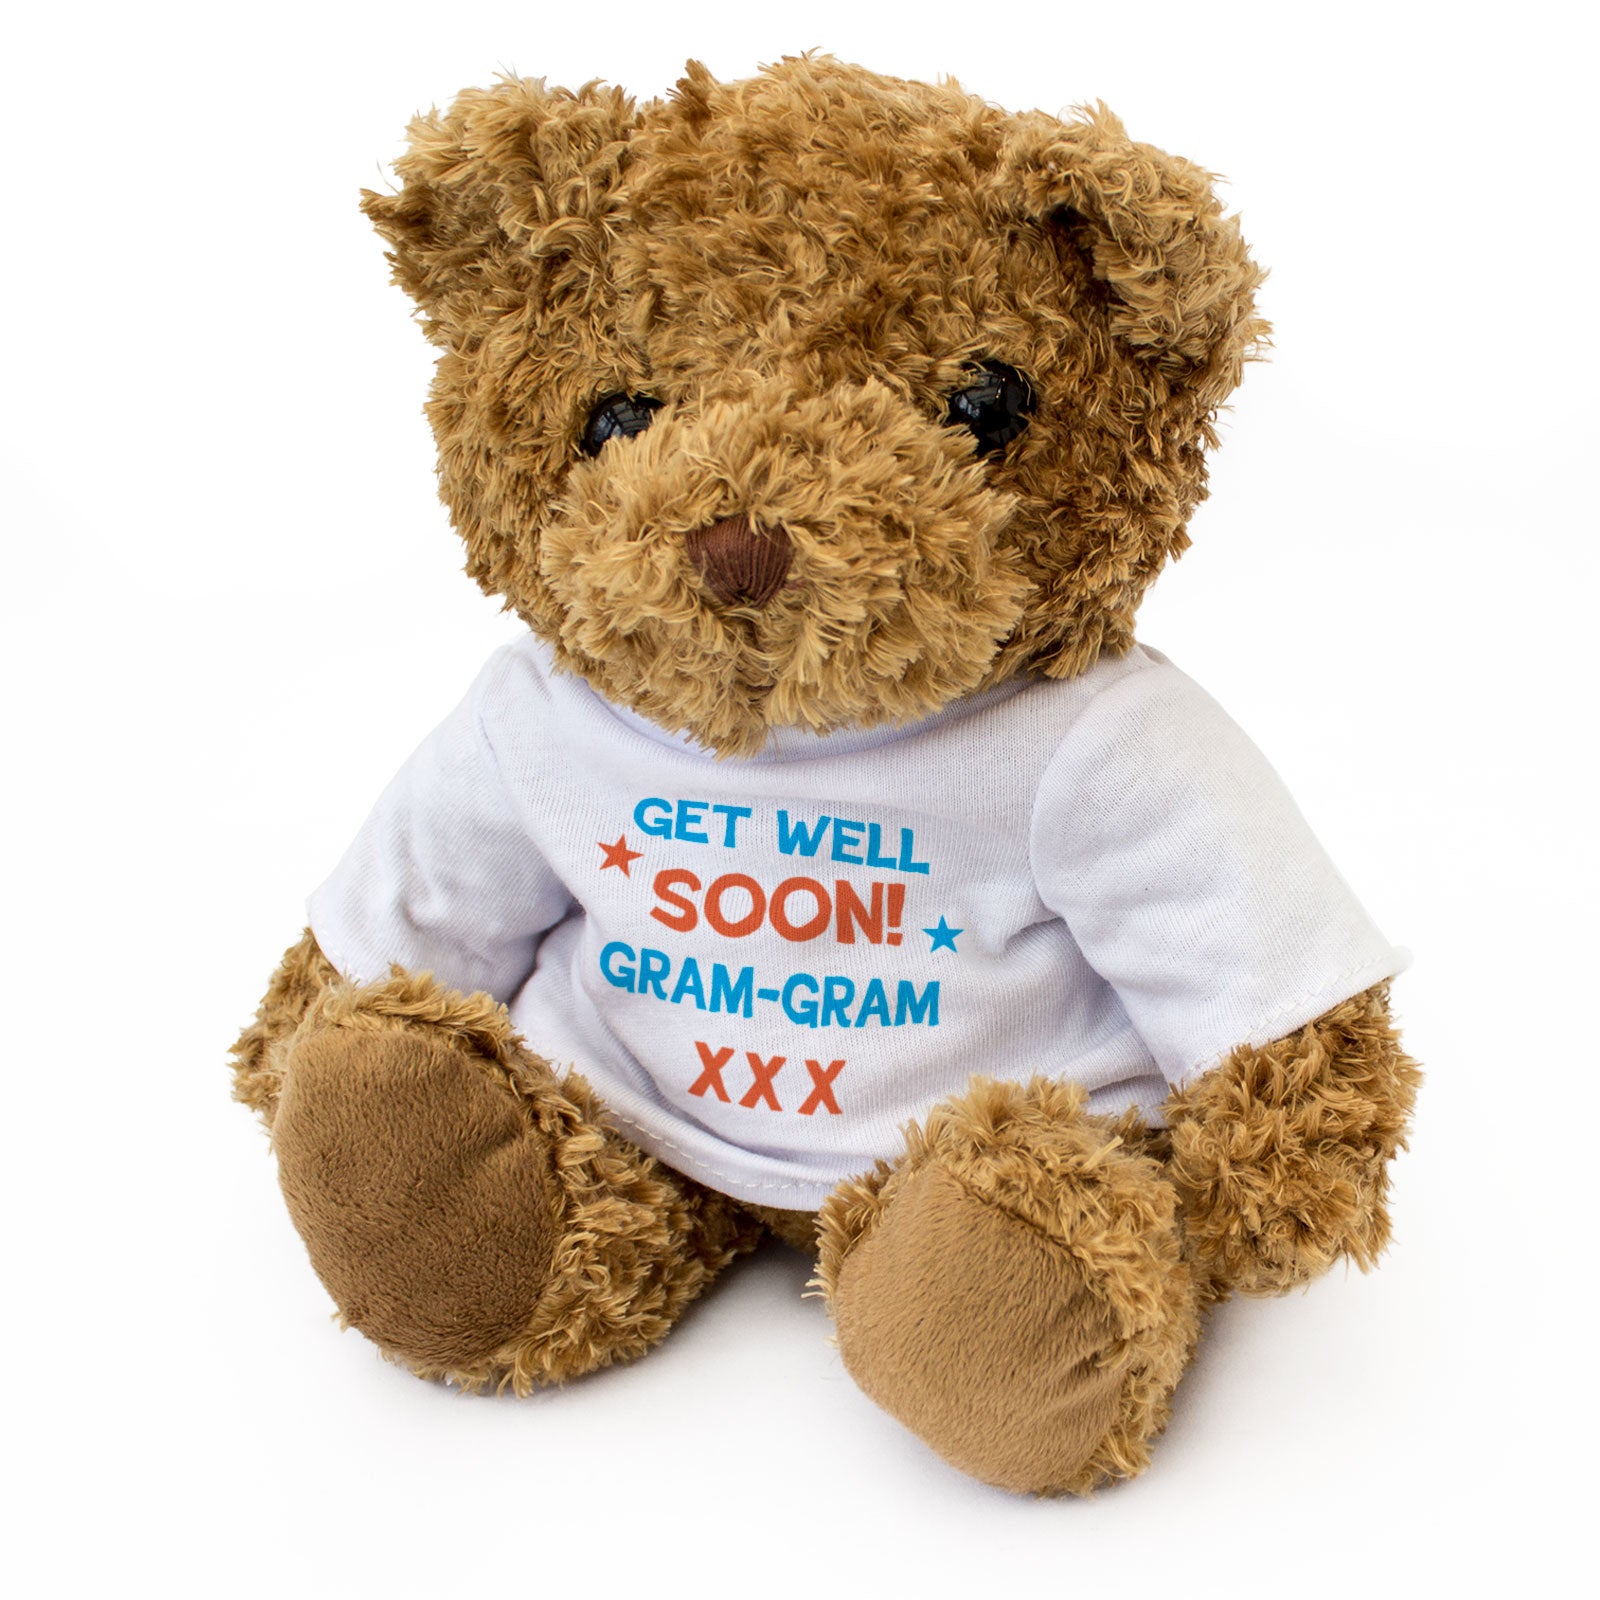 Get Well Soon Gram-Gram - Teddy Bear